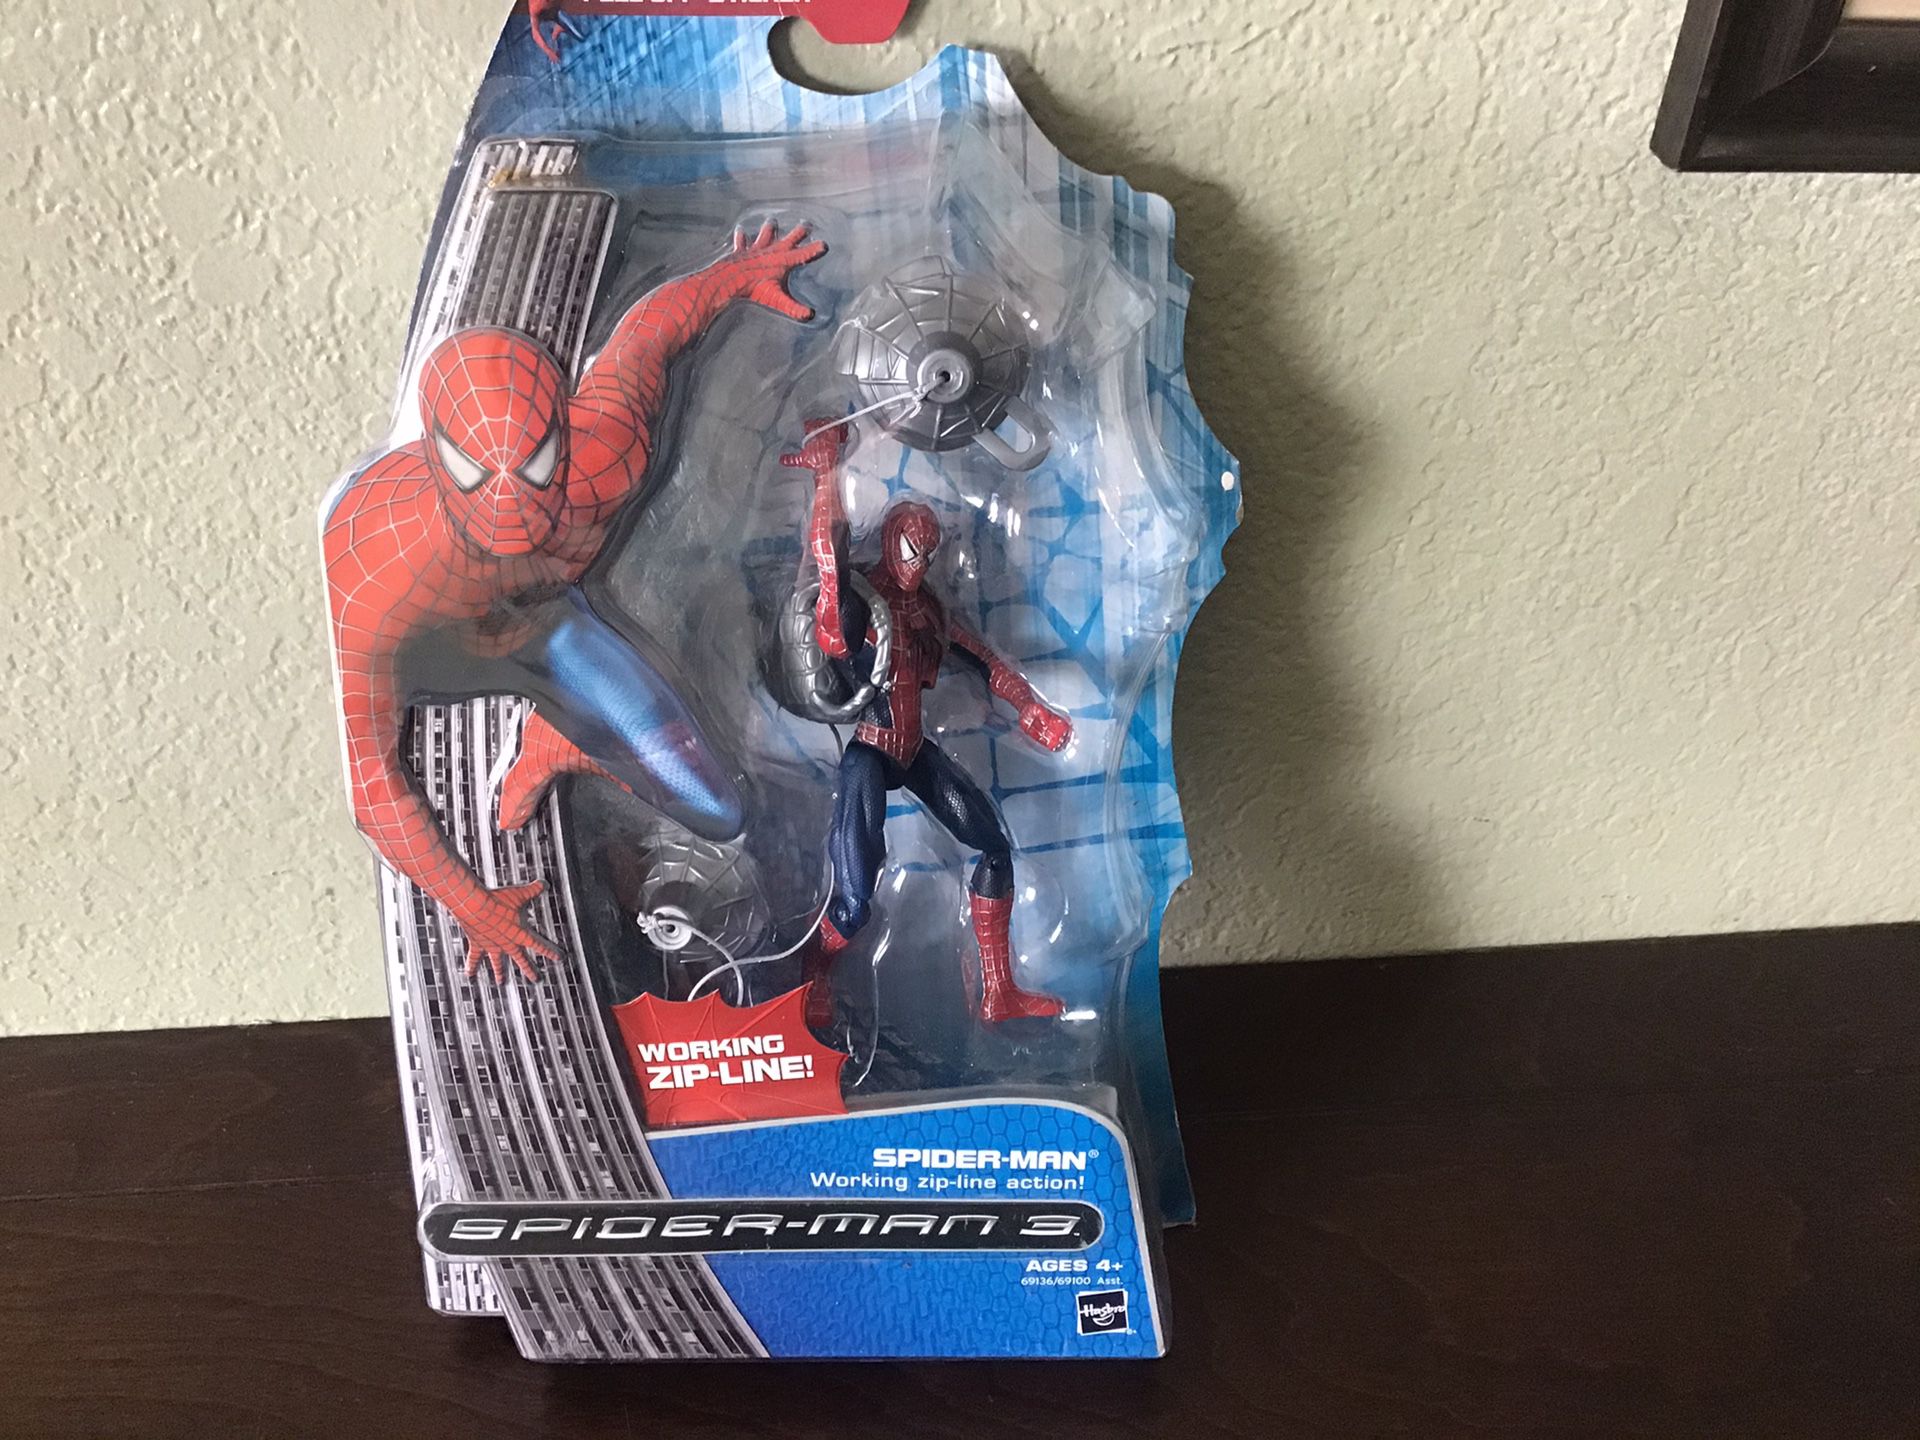 Spider-Man 3 action figure with working zip line